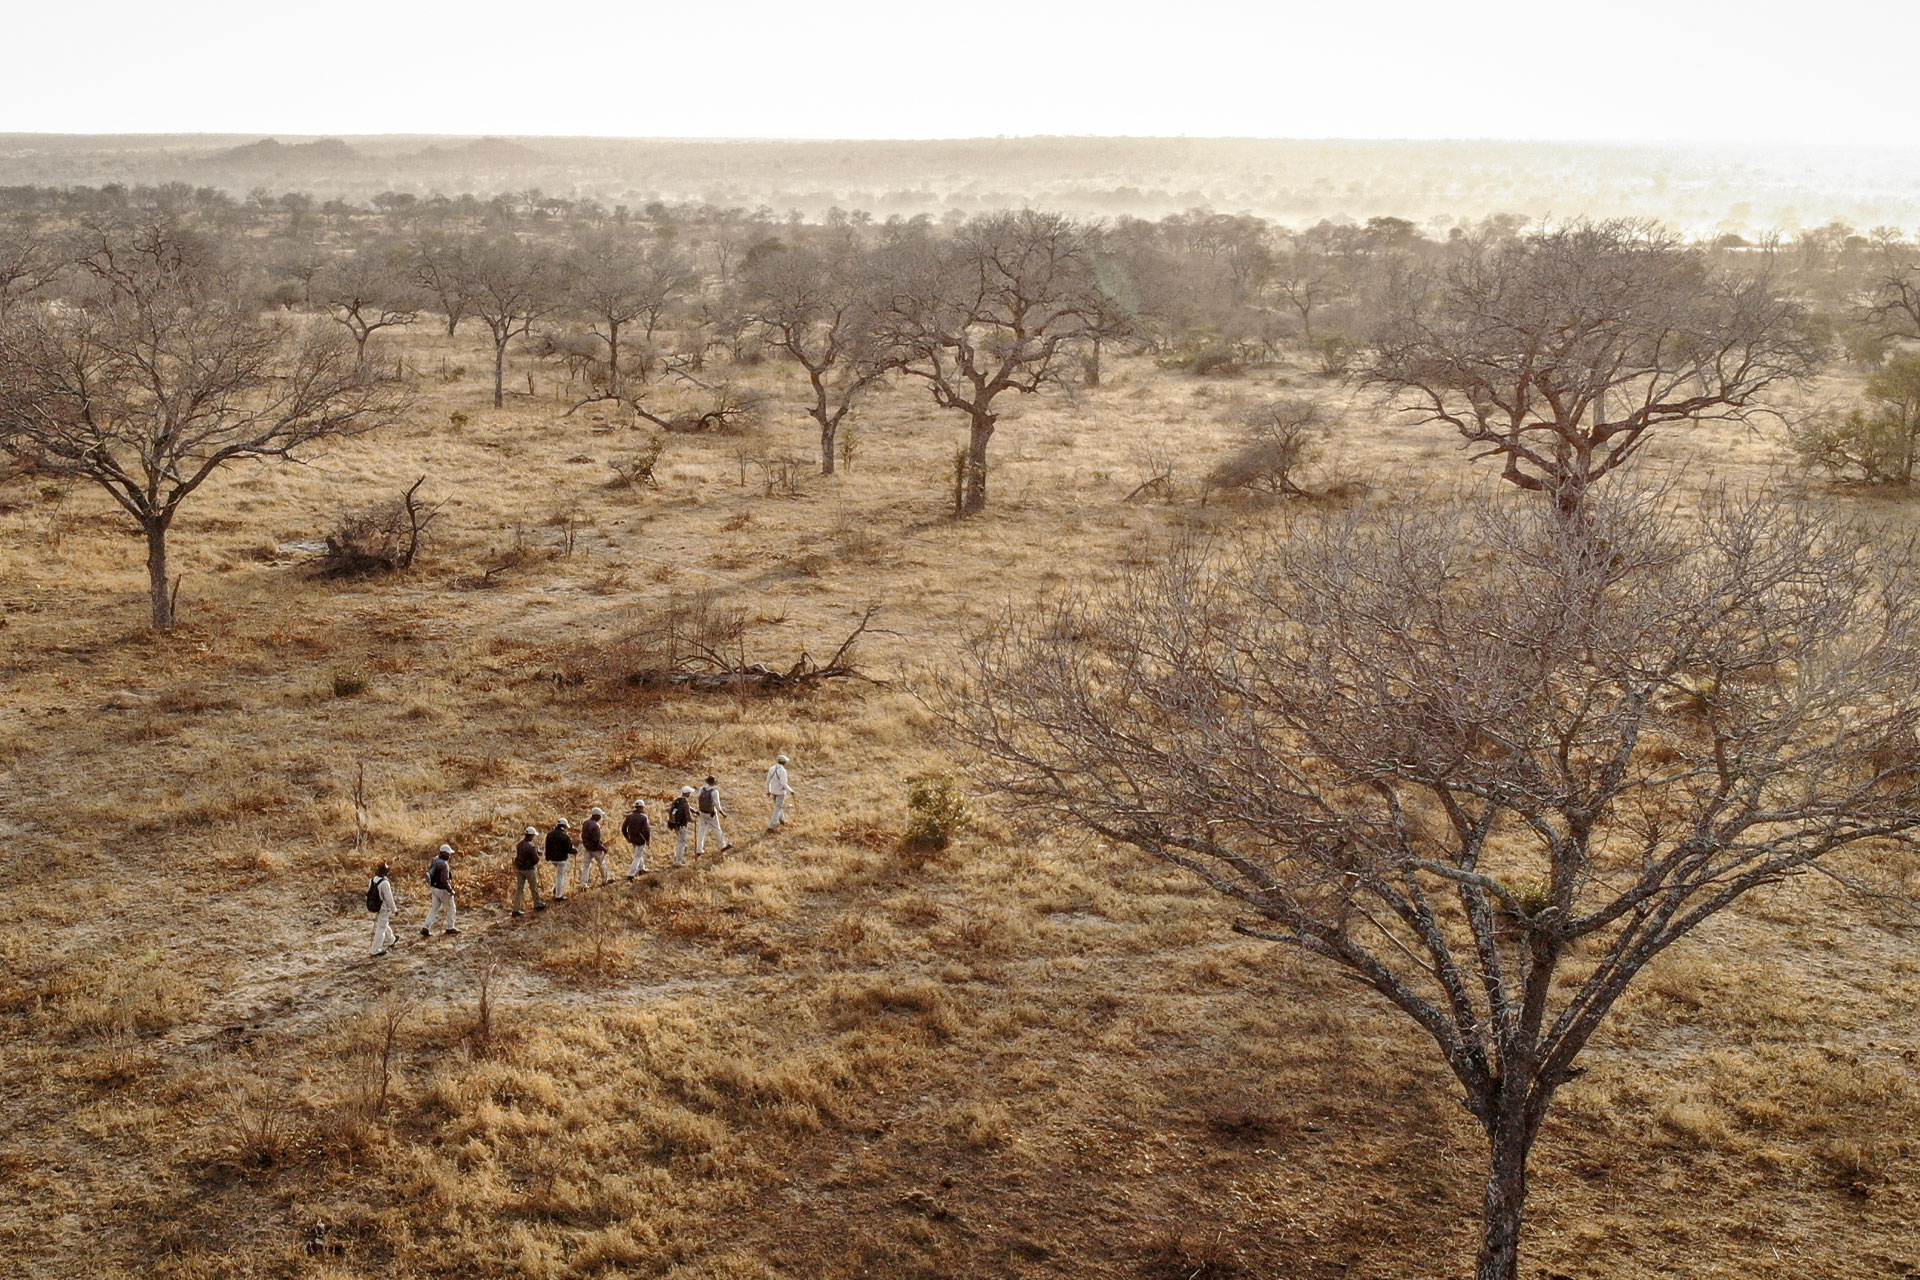 People walking in a line on a walking safari in Africa.